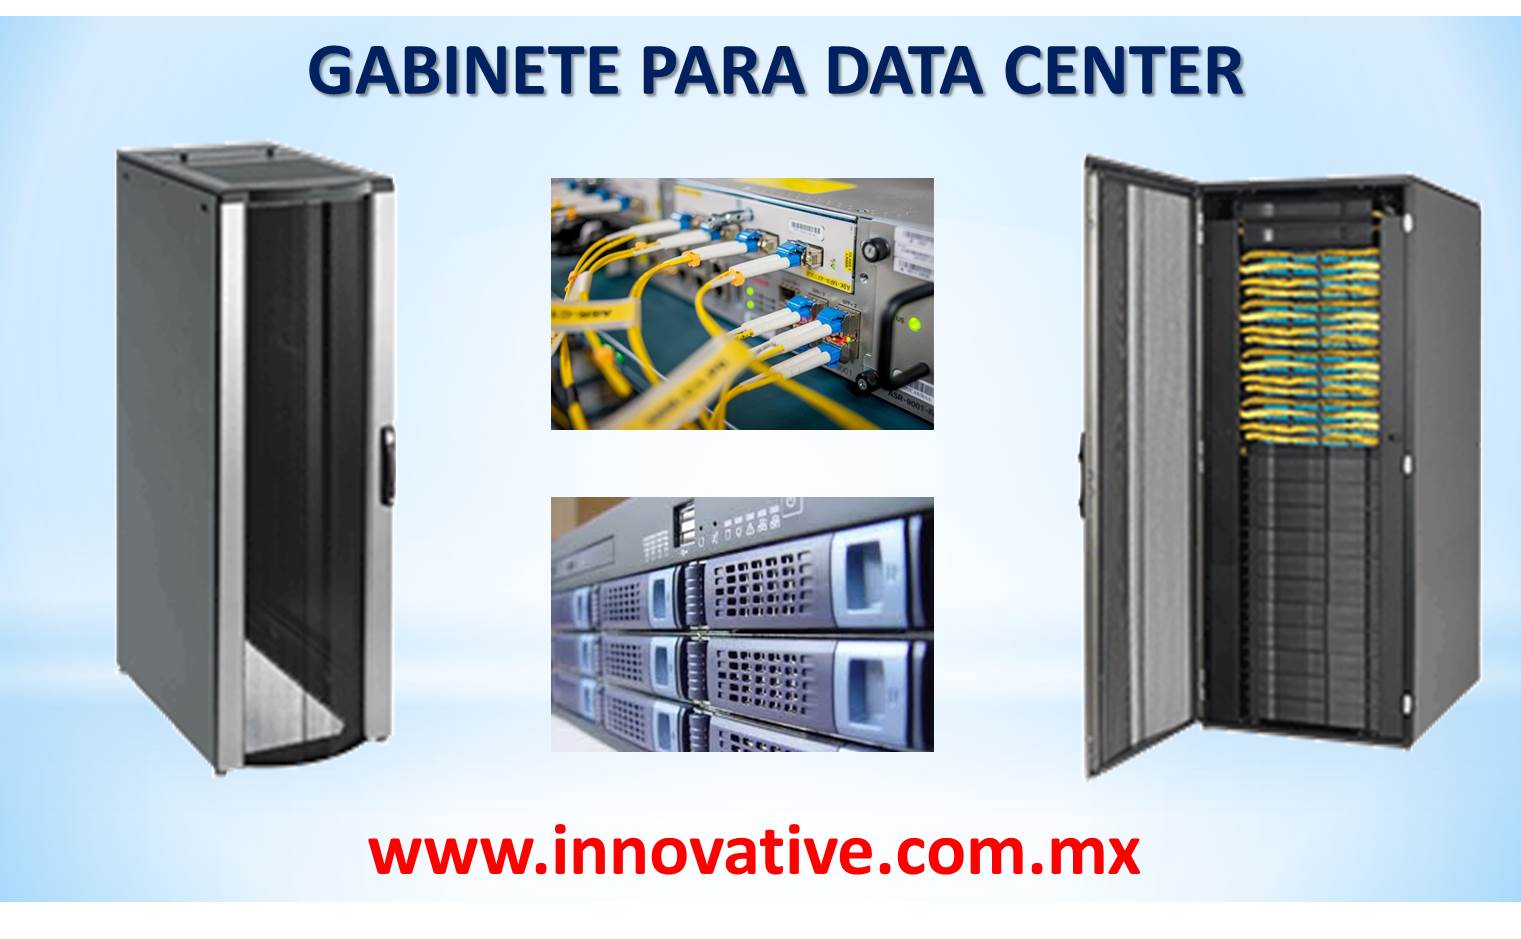 Gabinete para Data Center Tecate, Gabinete para Data Center Ensenada, Gabinete para Data Center Mexicali, Gabinete para Data Center Sonora,